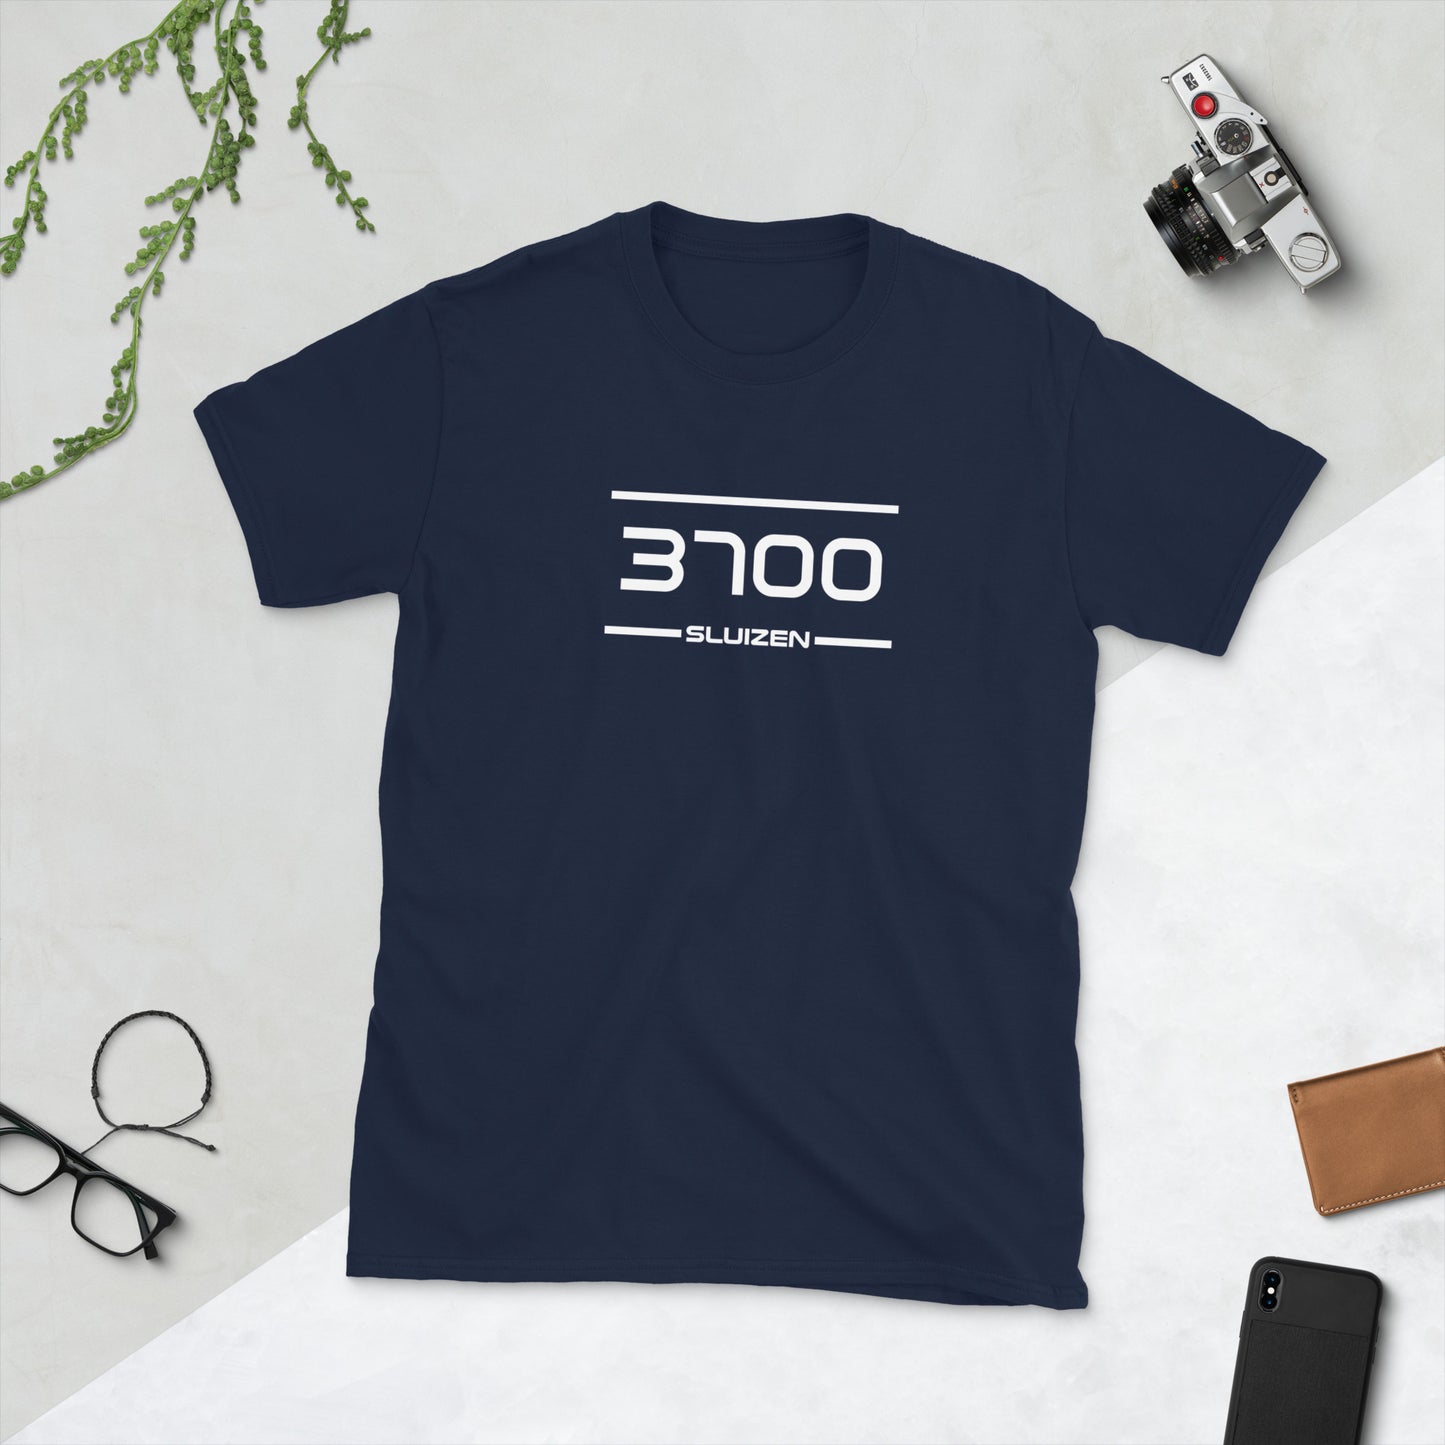 Tshirt - 3700 - Sluizen